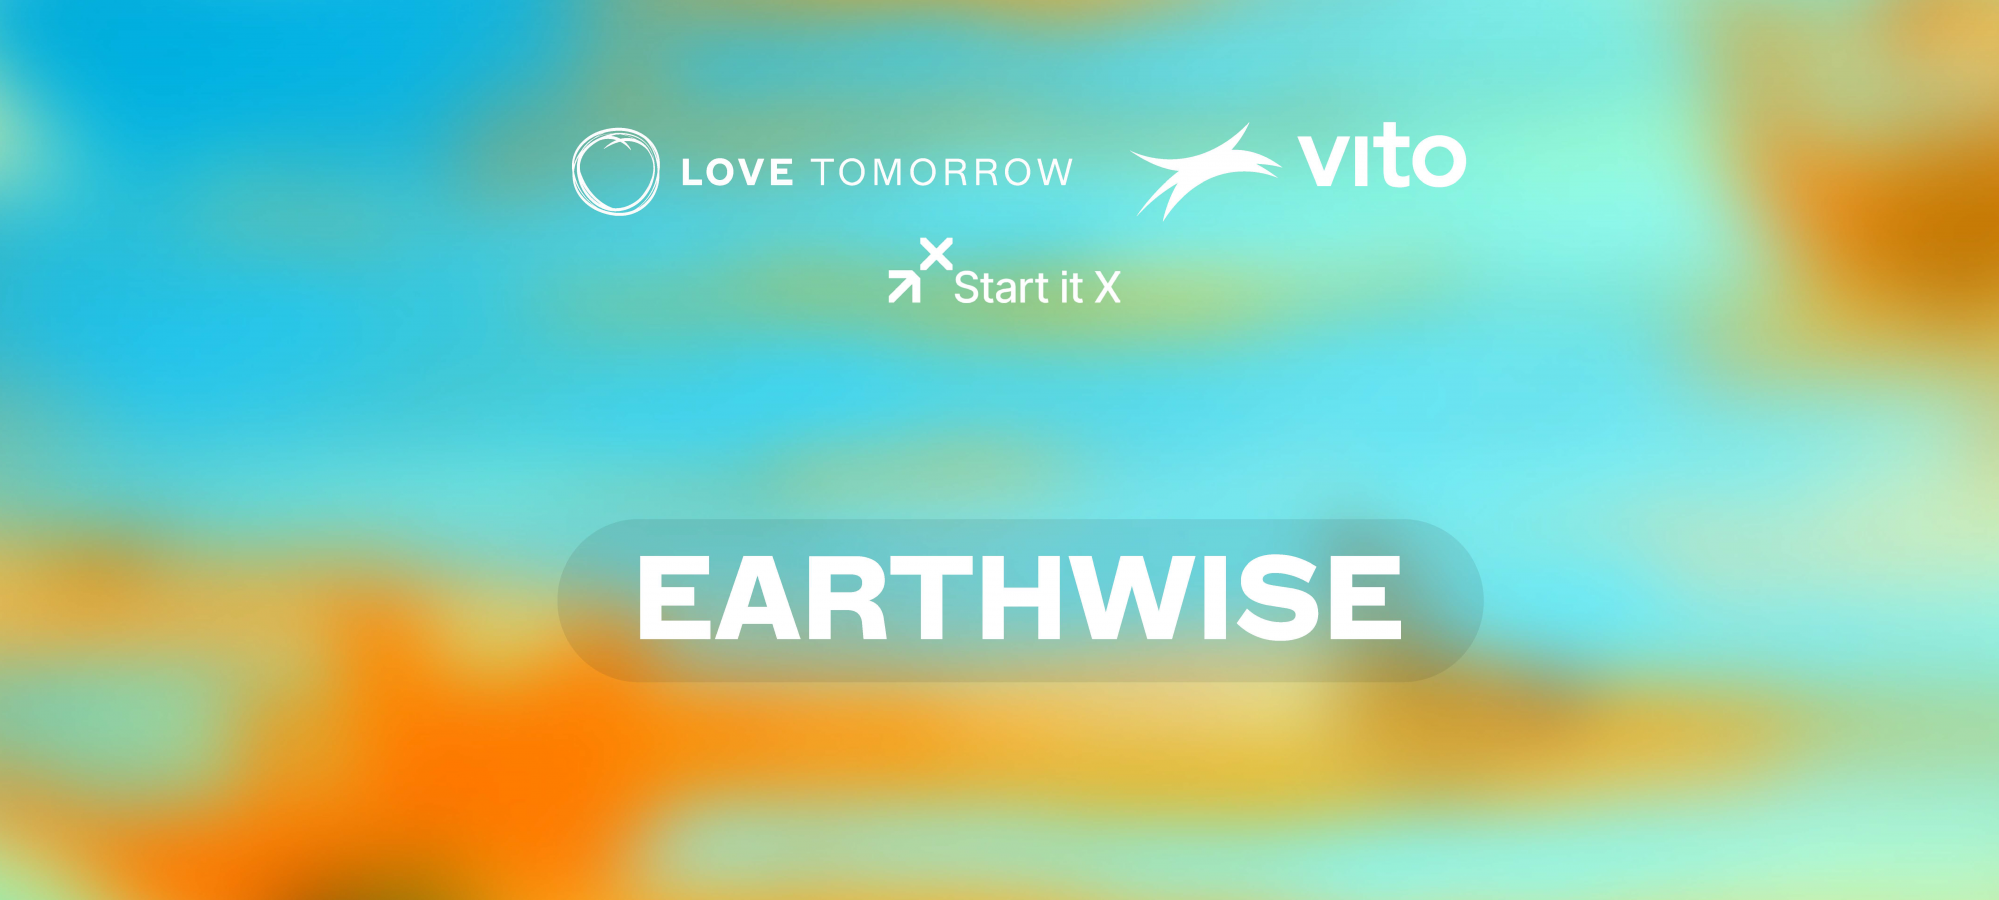 earthwise_love_tomorrow_vito